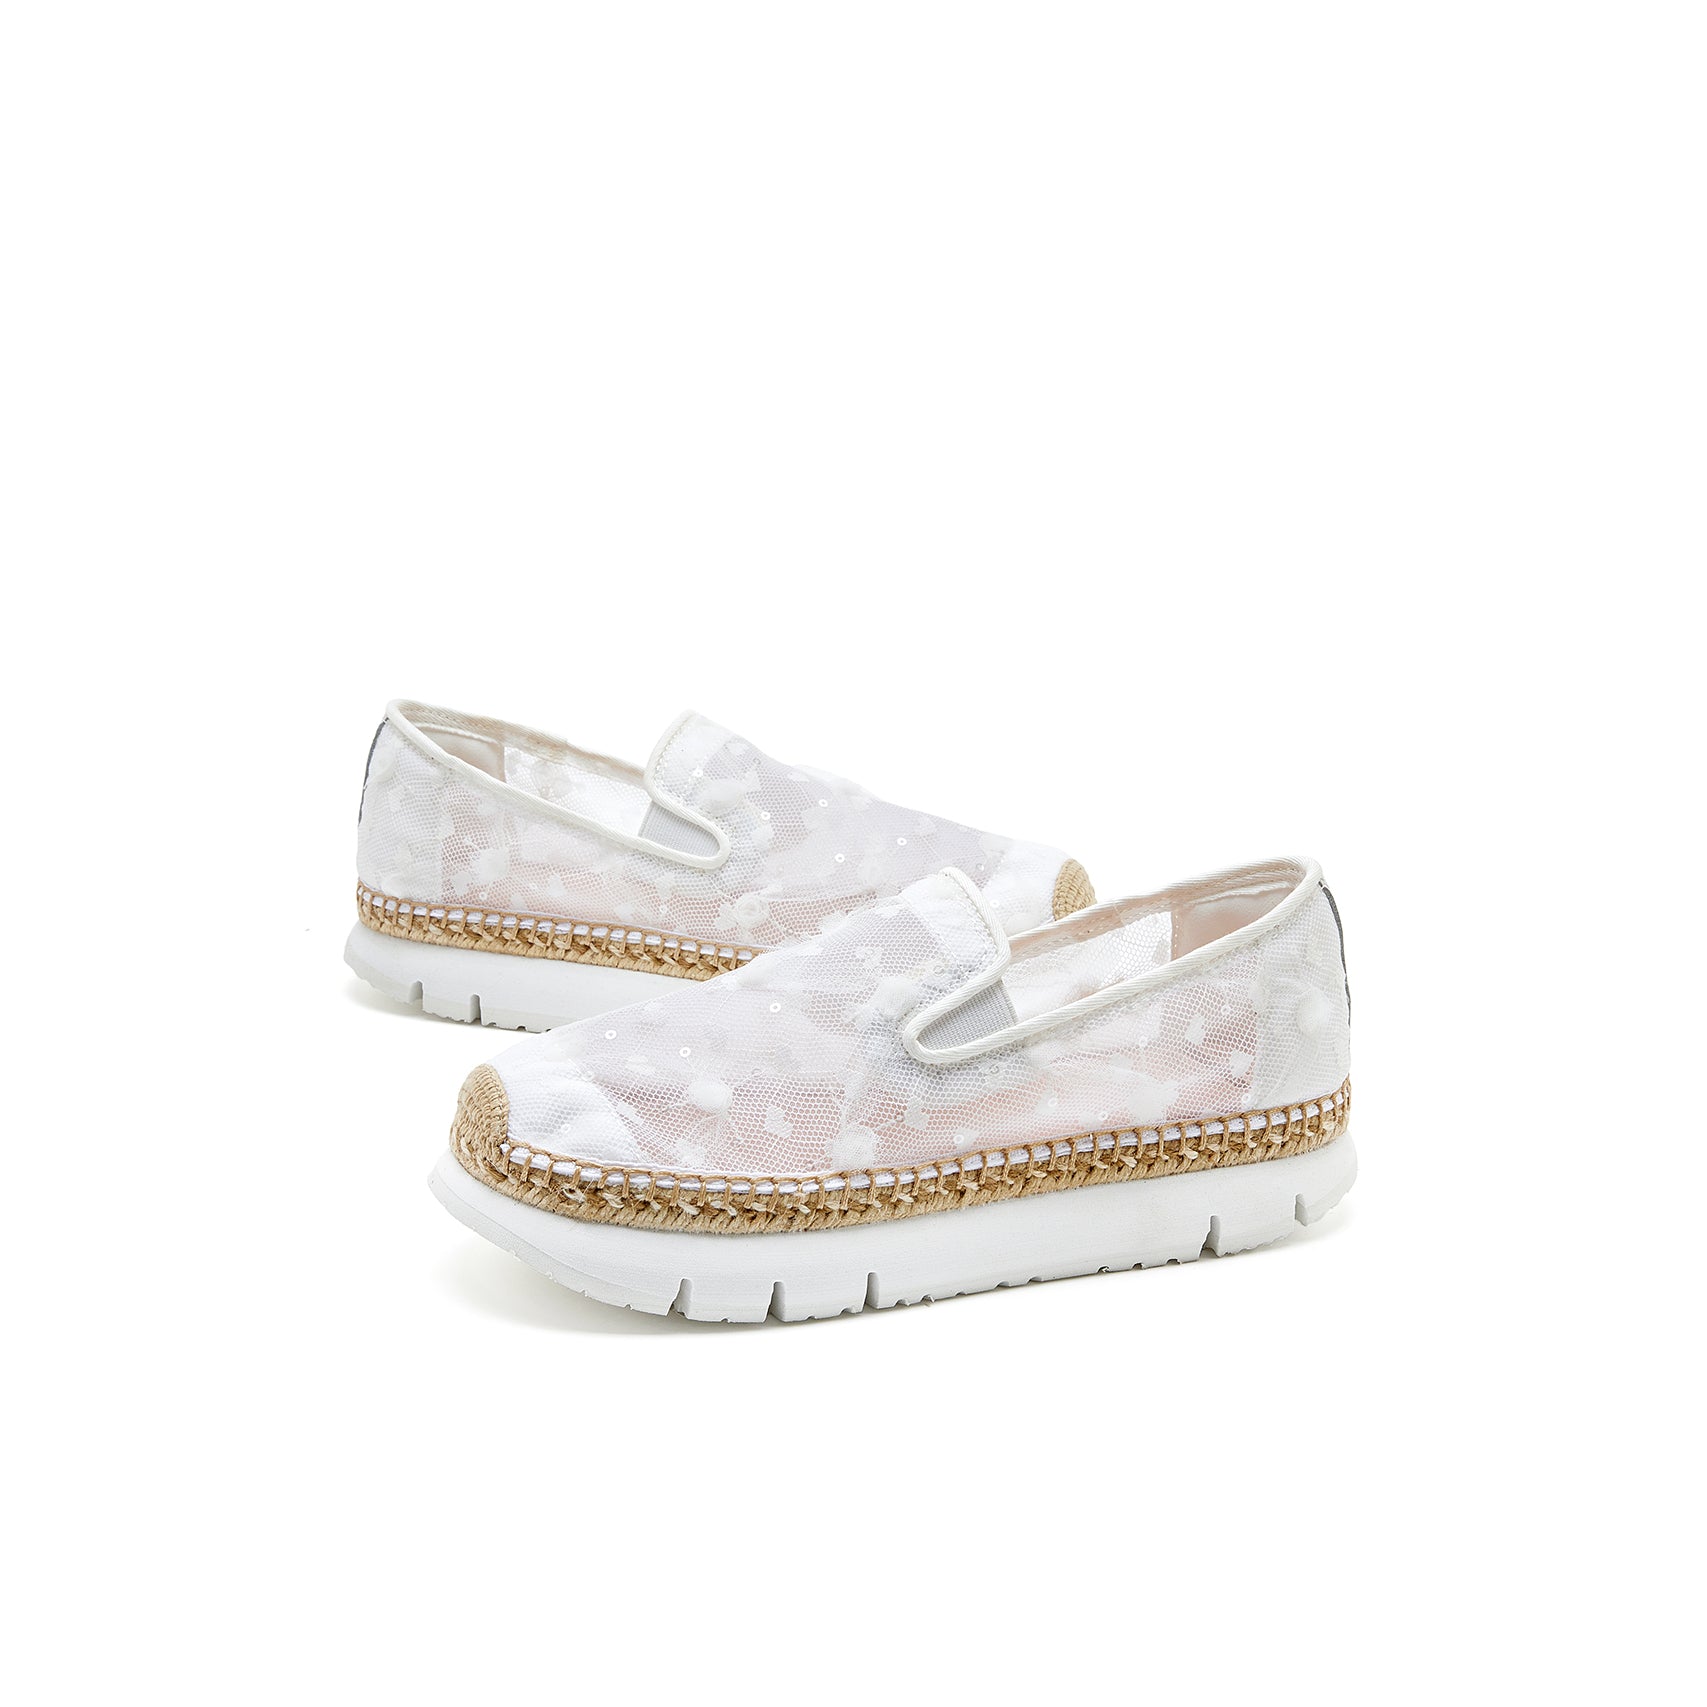 JOY&MARIO Handmade Women’s Slip-On Espadrille Mesh Loafers in White-52112W